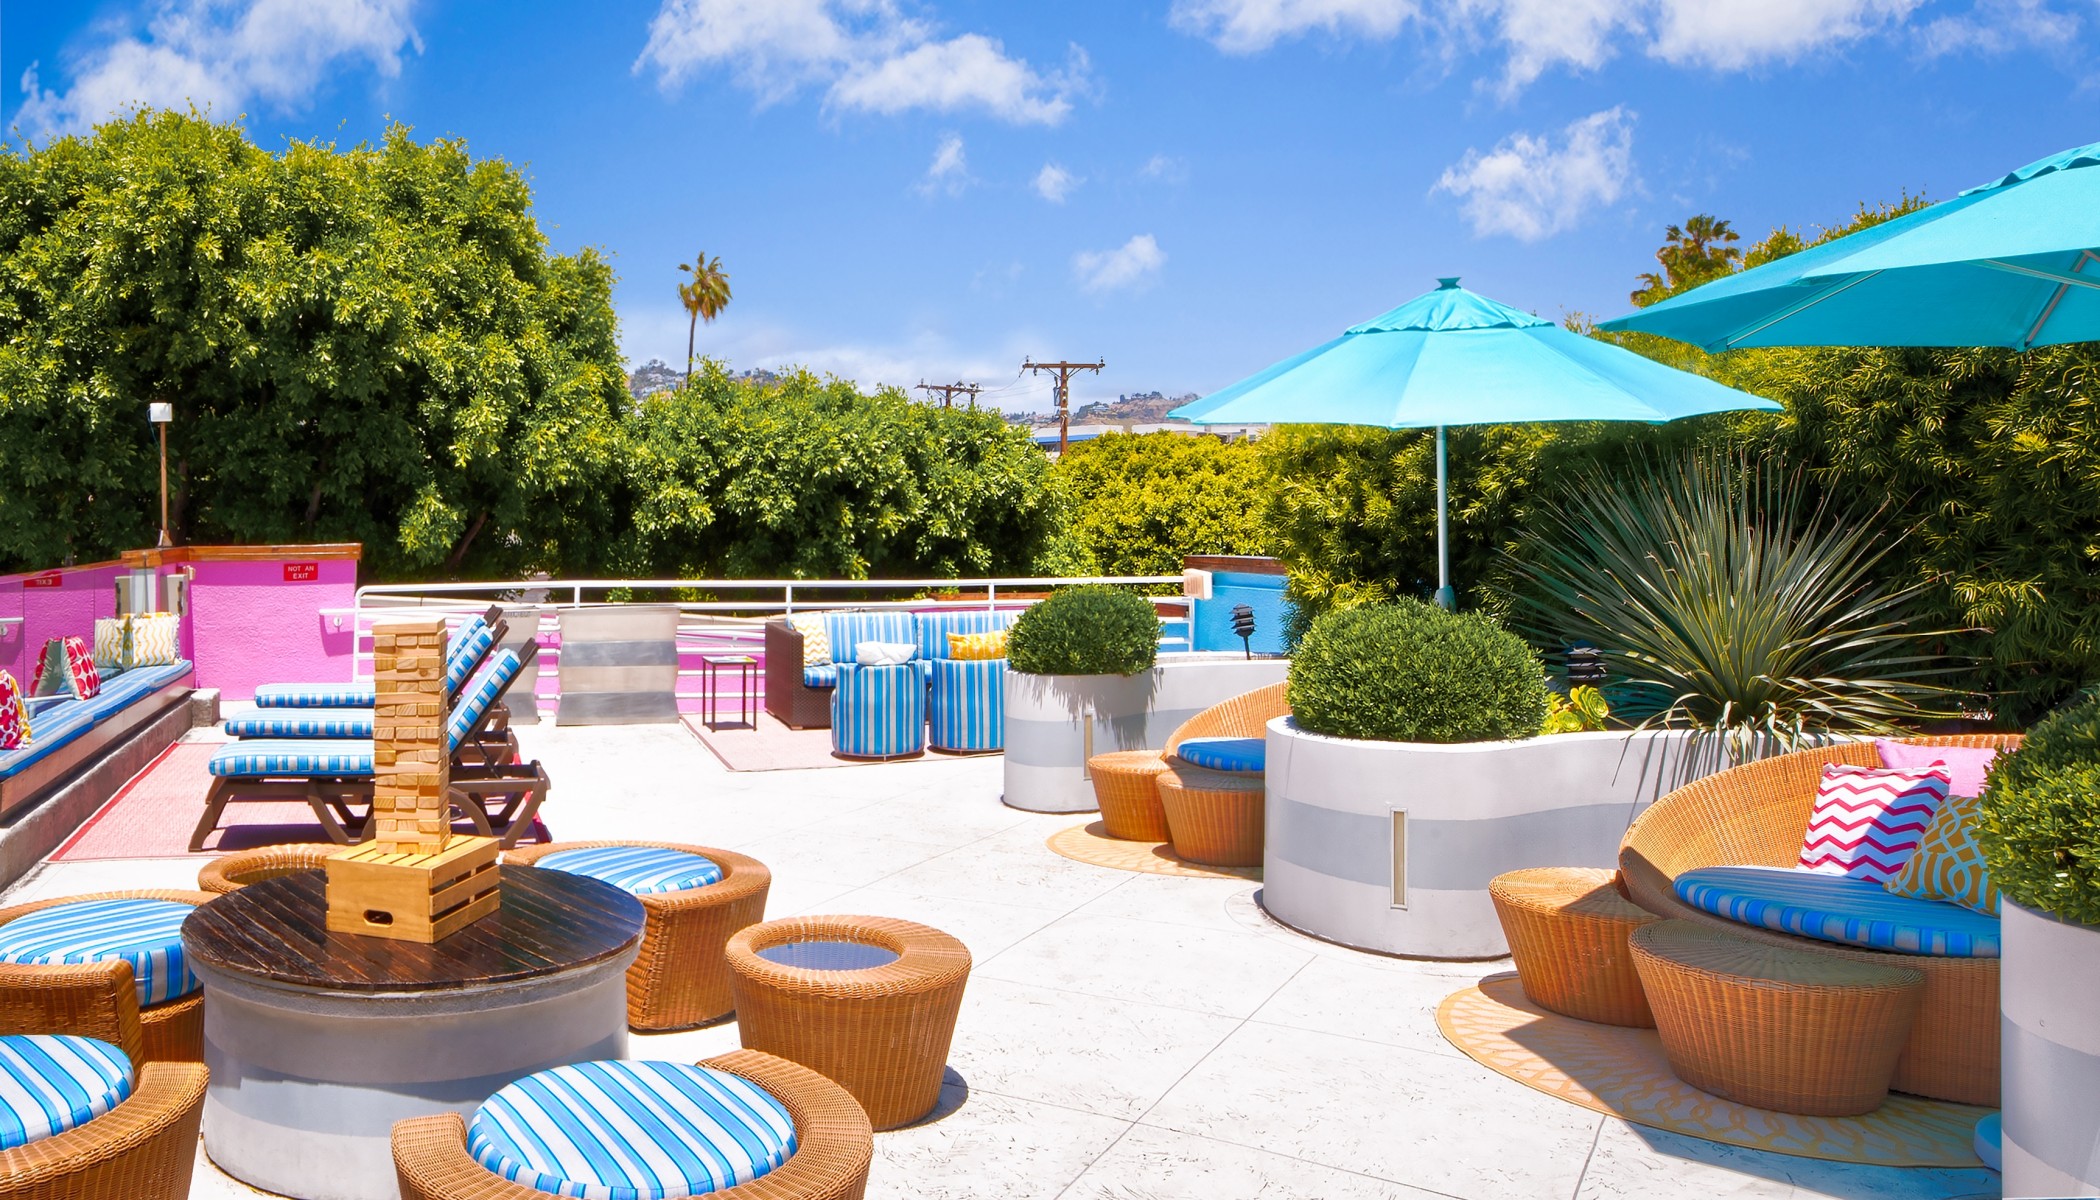 Photo of the hotel Sofitel Los Angeles at Beverly Hills: Img 4481 edited effect medium